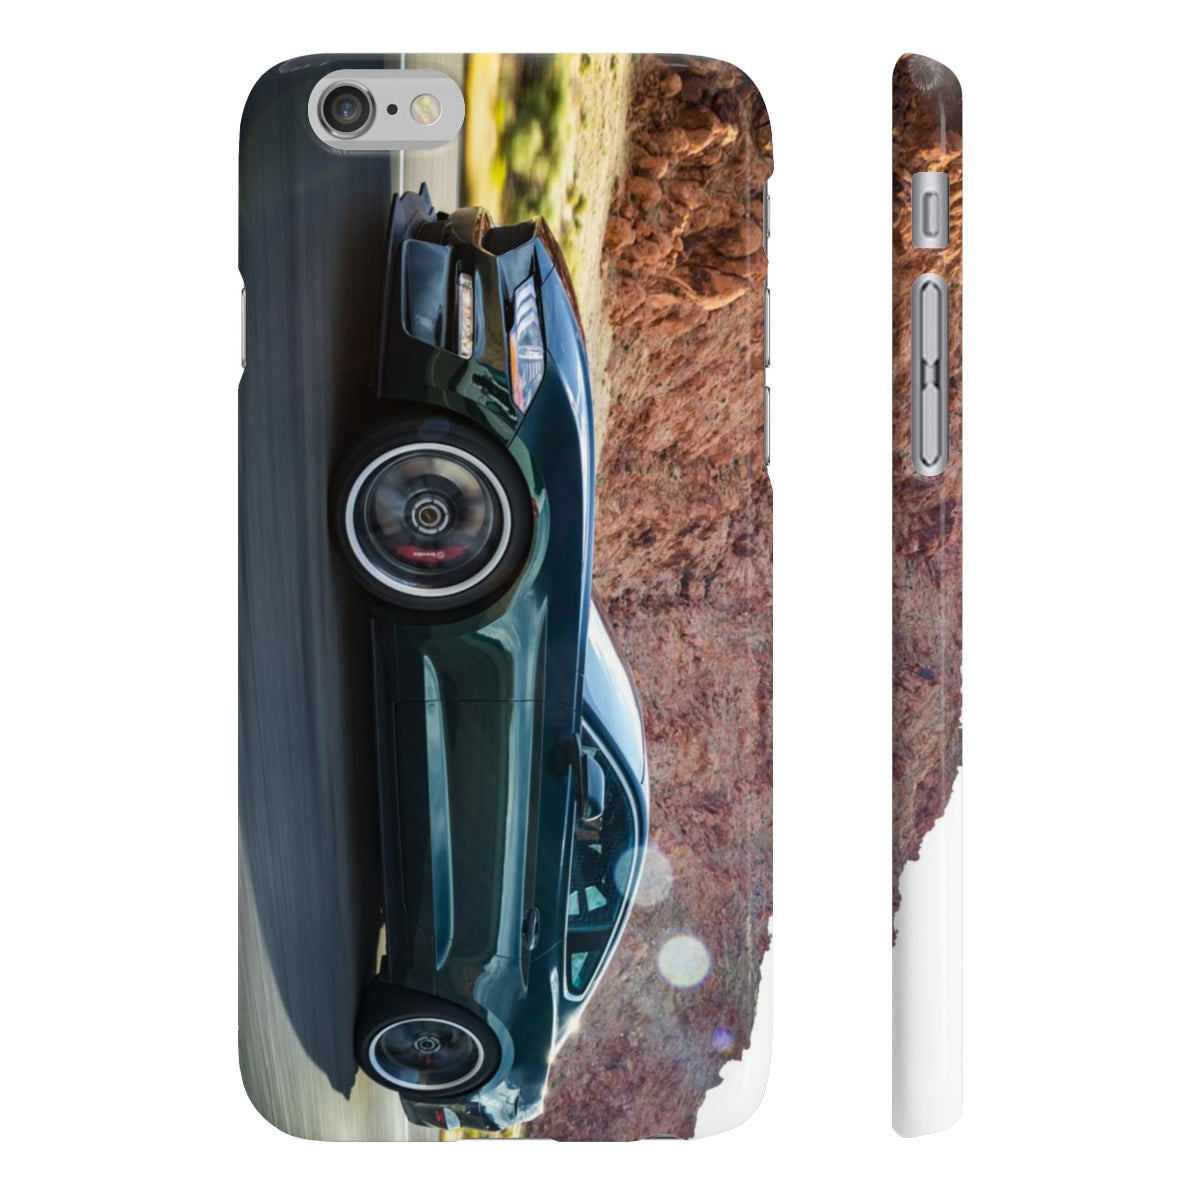 Steeda Steve McQueen Limited Edition Bullitt Mustang Image Slim Phone Cases für iPhone 6, 7 & 8